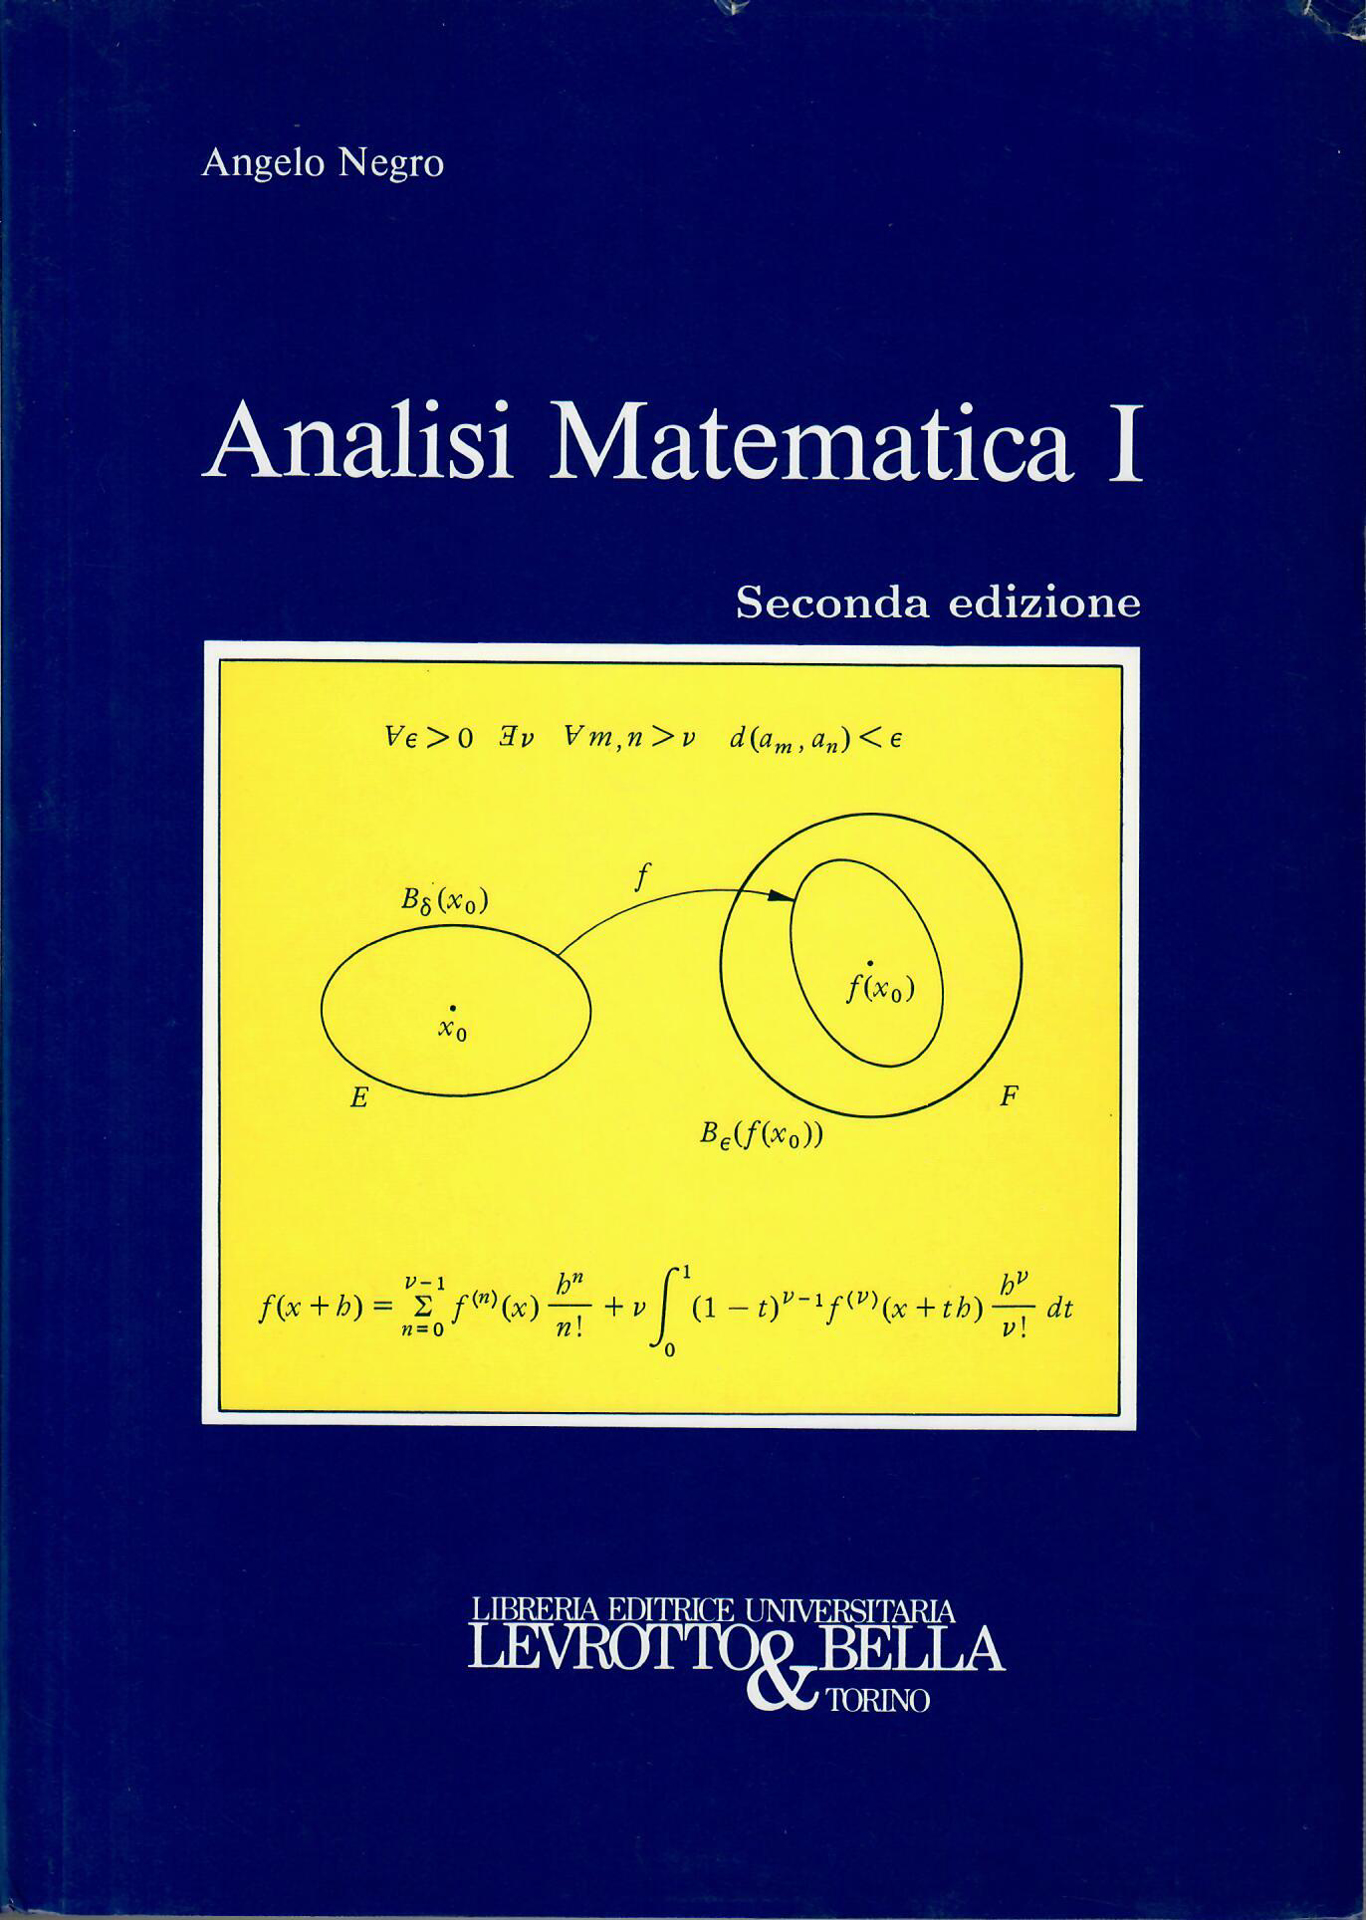 https://levrotto-bella.net/images/thumbs/0001518_analisi-matematica-1.jpeg